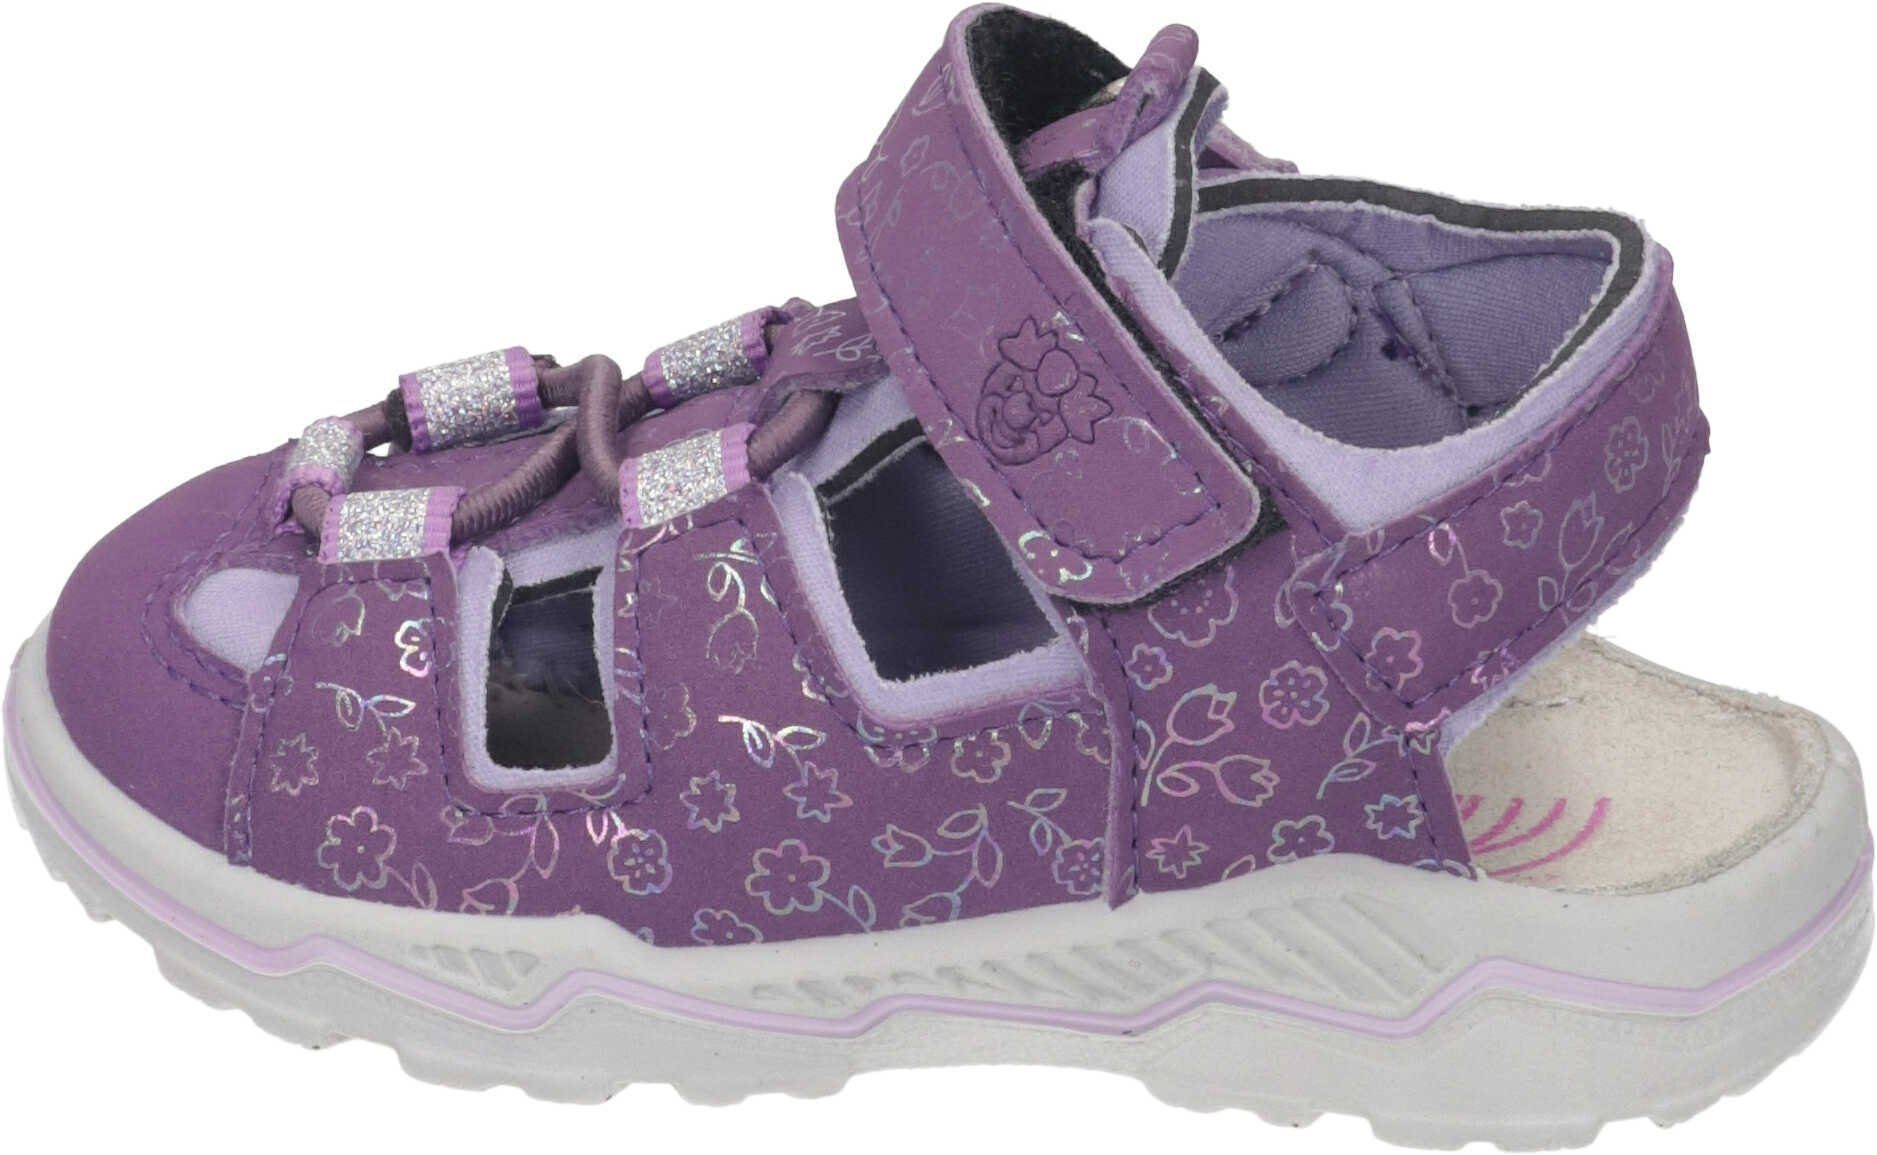 Pepino Sandaletten aus Cassis/Lavendel Synthetik/Textil Outdoorsandale